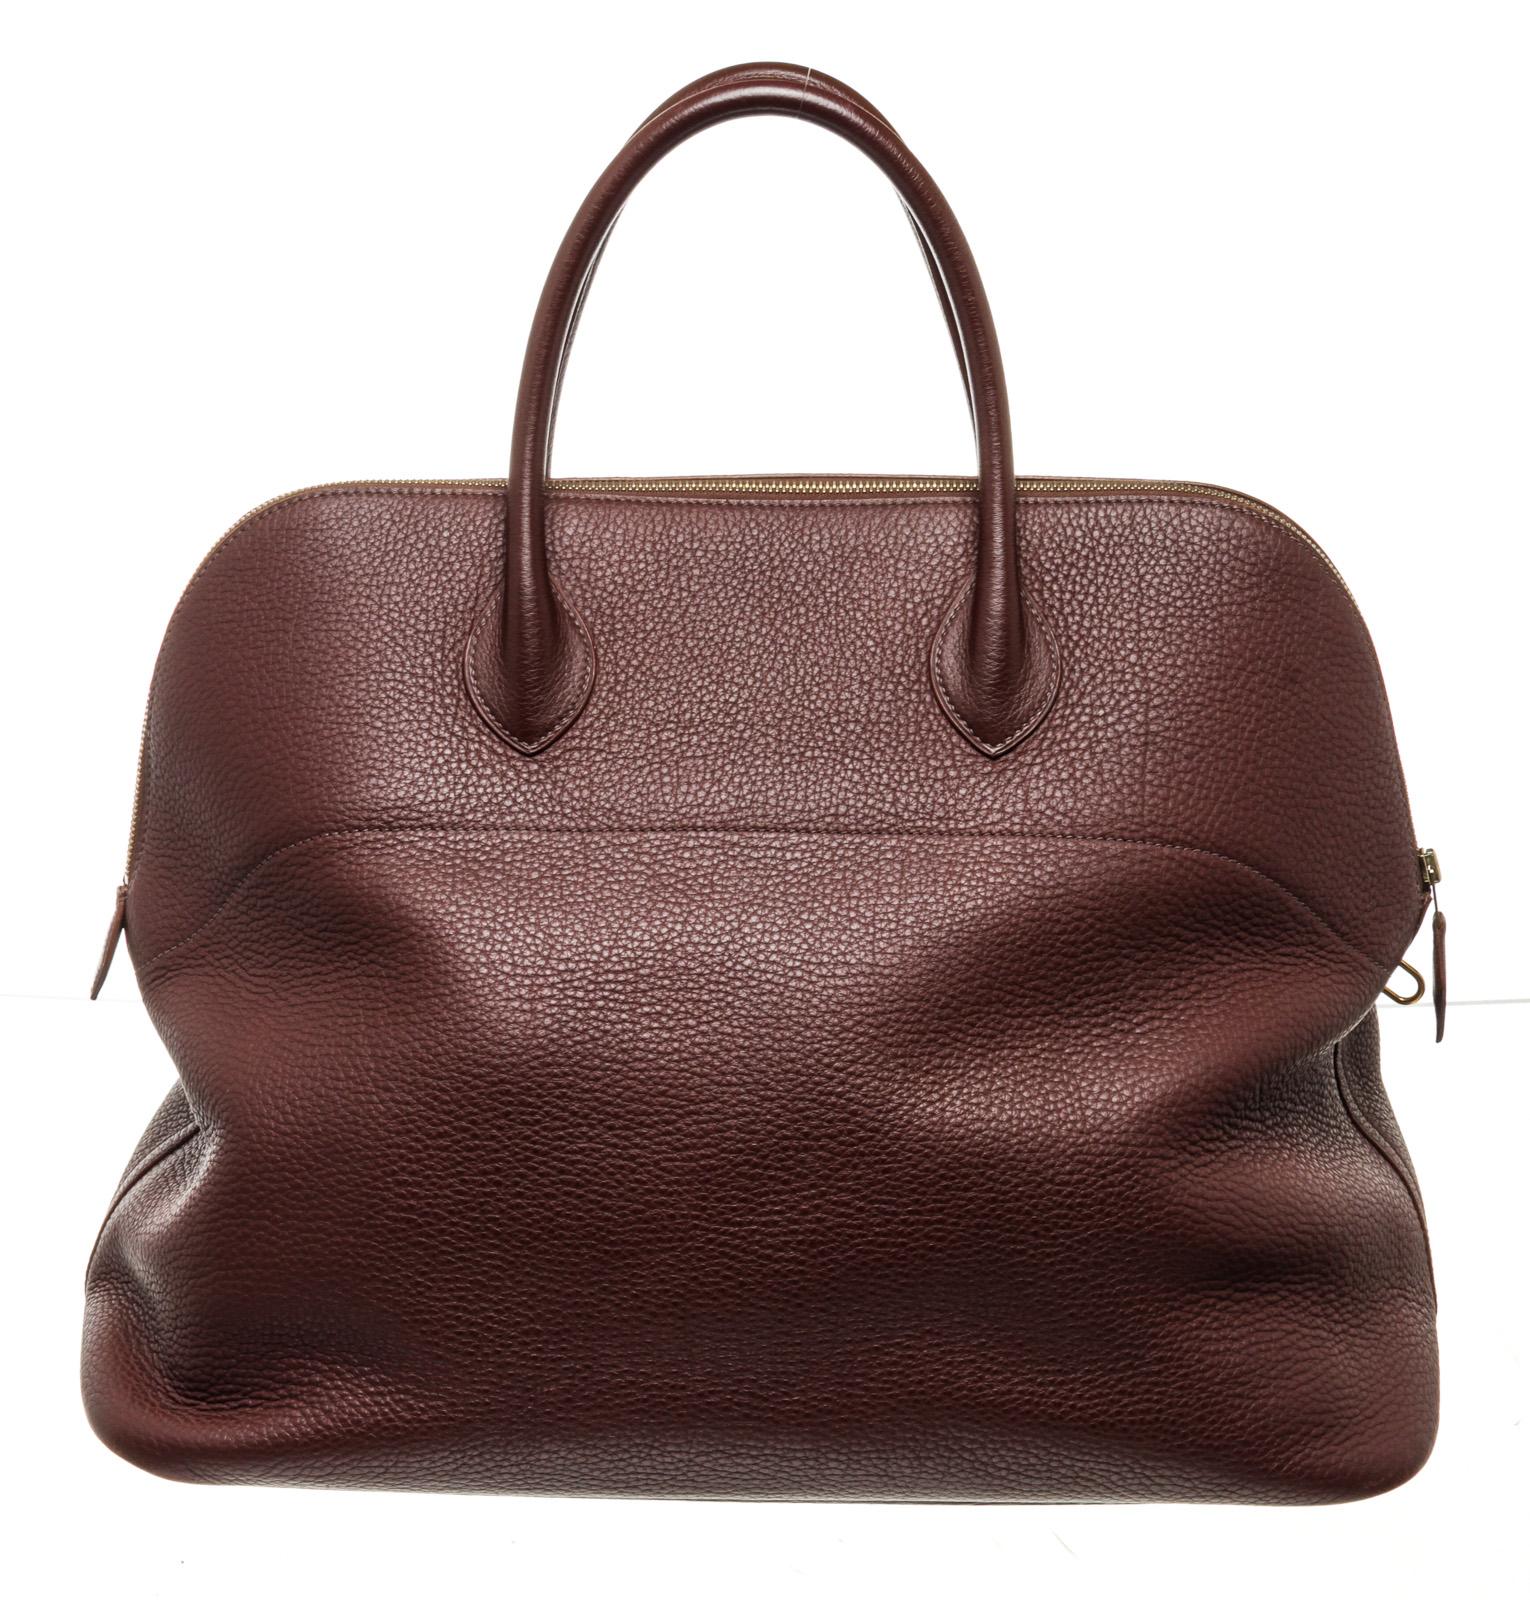 Hermes Brown Leather Bolide 45cm Shoulder Bag with leather, gold-toneÂ hardware, trim leather,Â dual top handle andÂ zipperÂ closure.

47175MSC